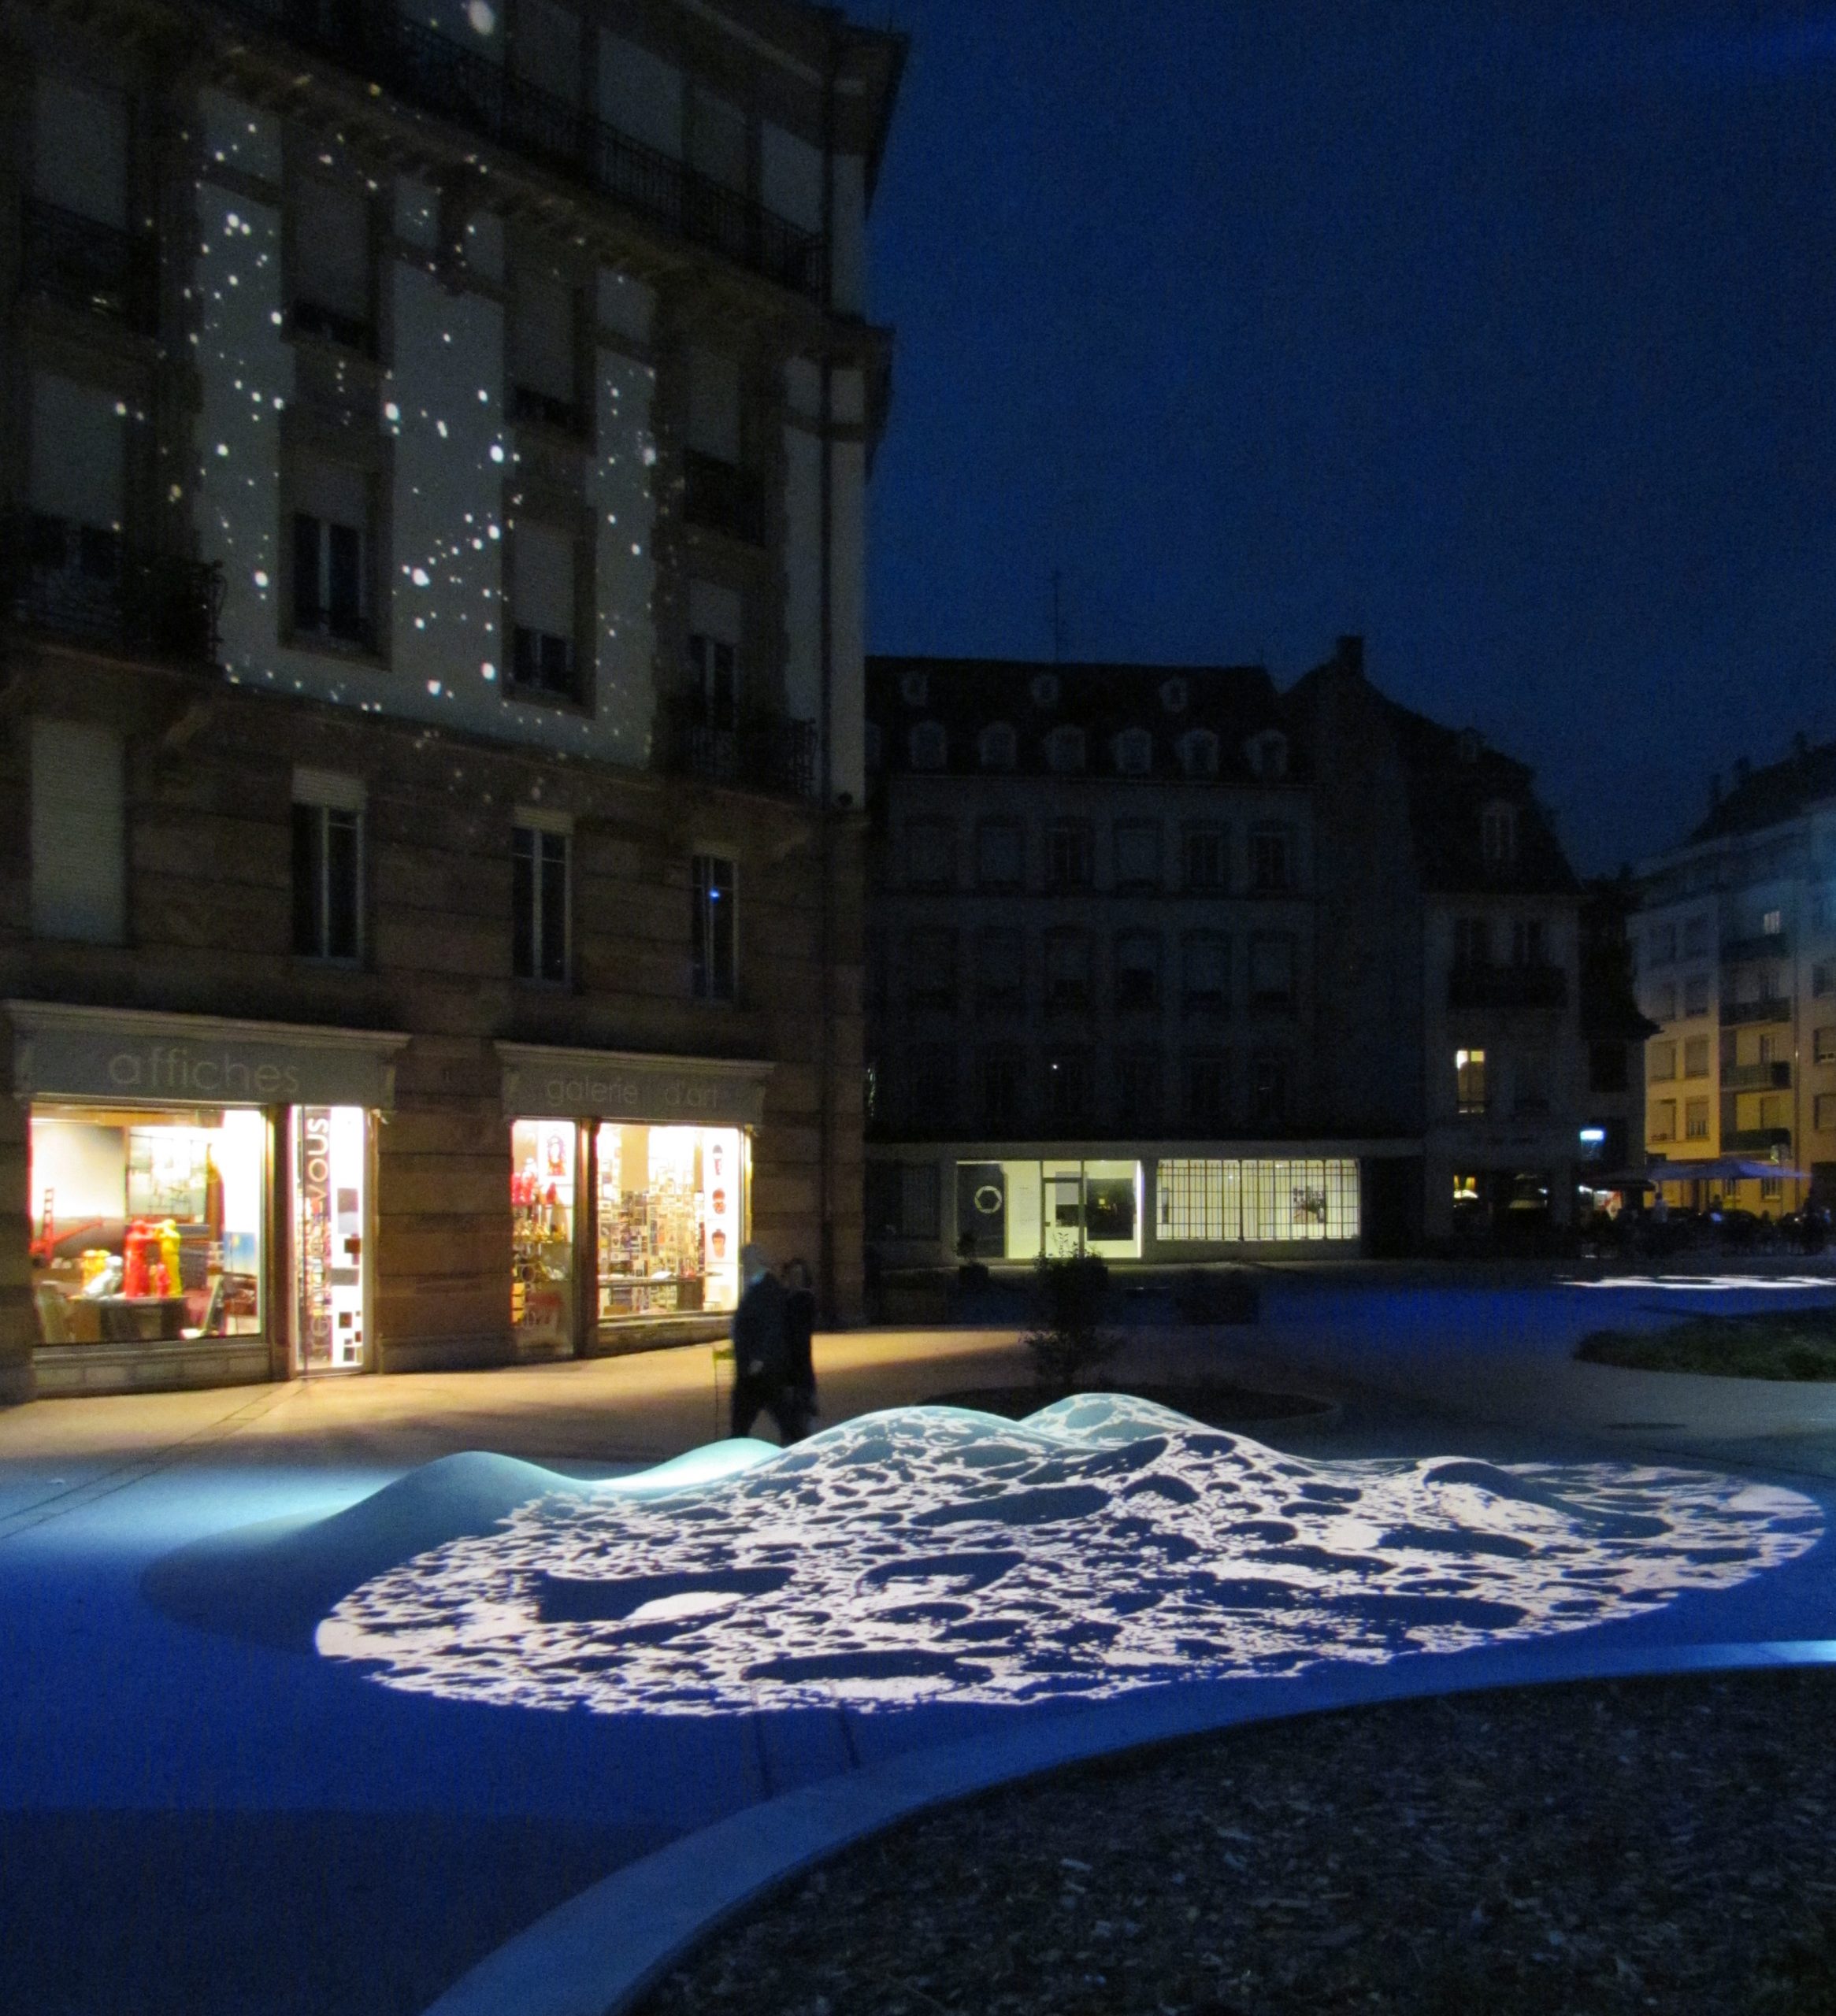 File:Maquette miniature place d'Austerlitz - Strasbourg by night